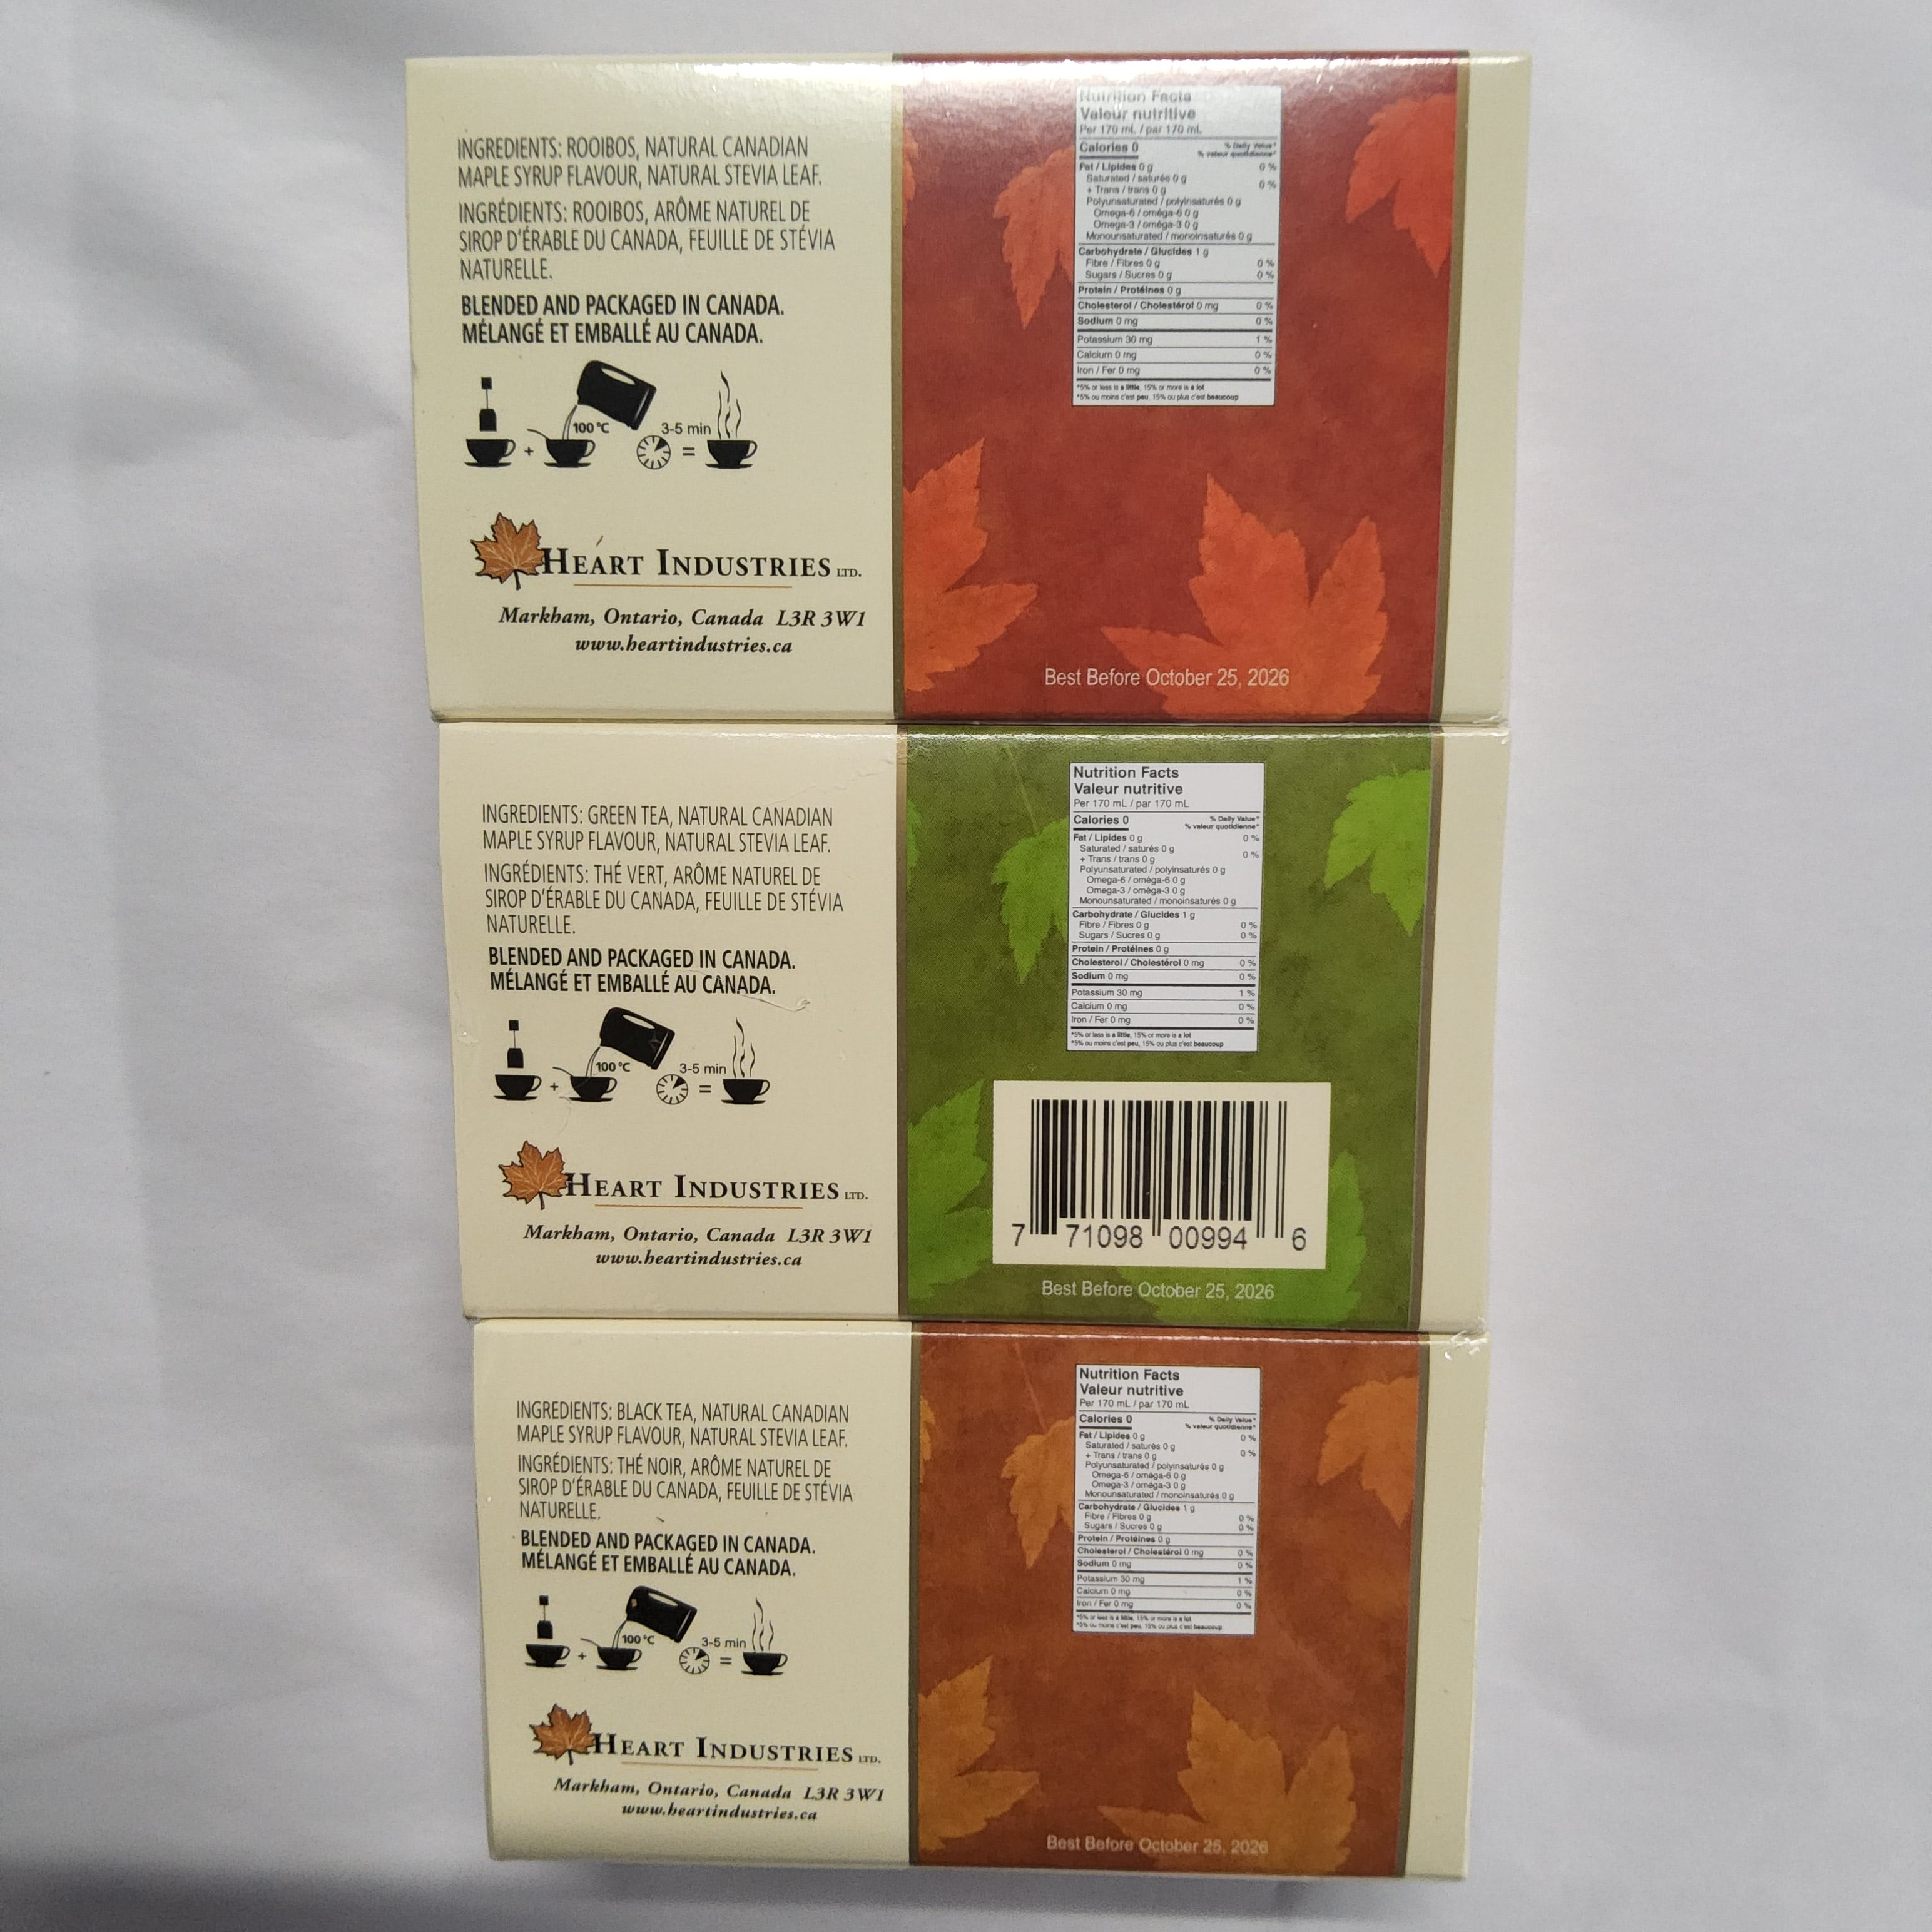 Assorted Maple Tea - 3 pack, 10 bags each - MGH10-3PK